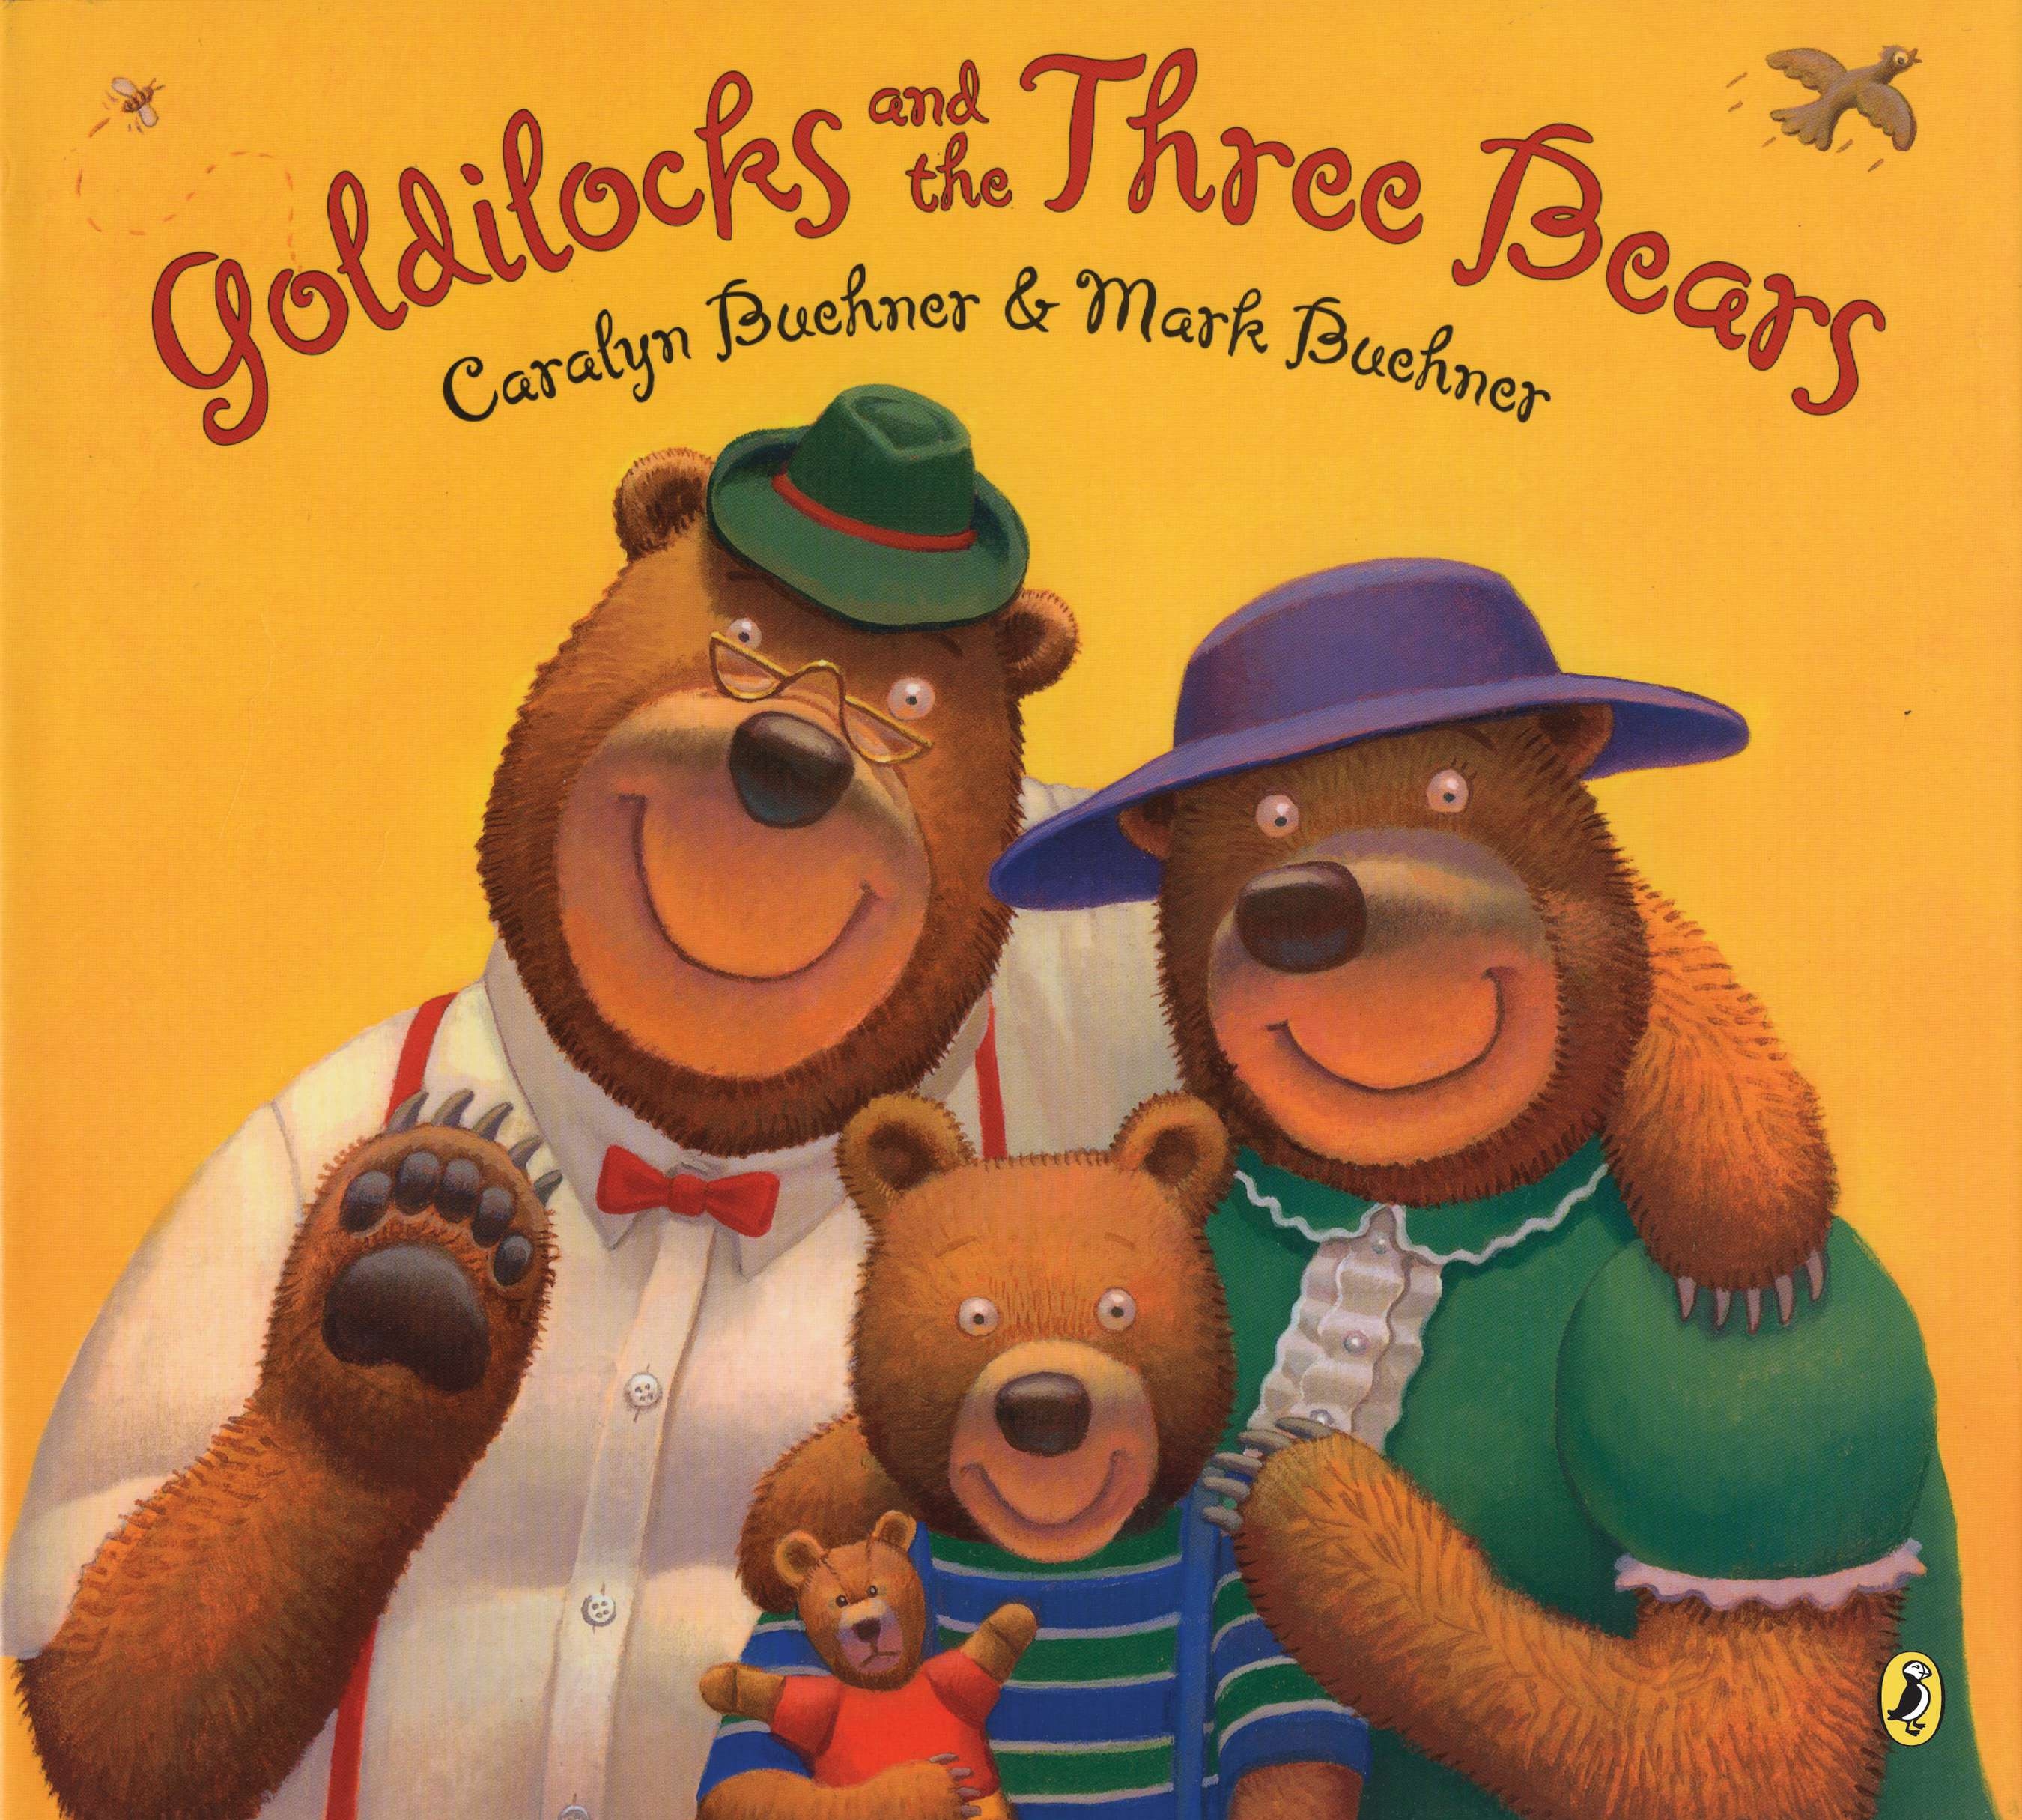 book review goldilocks three bears